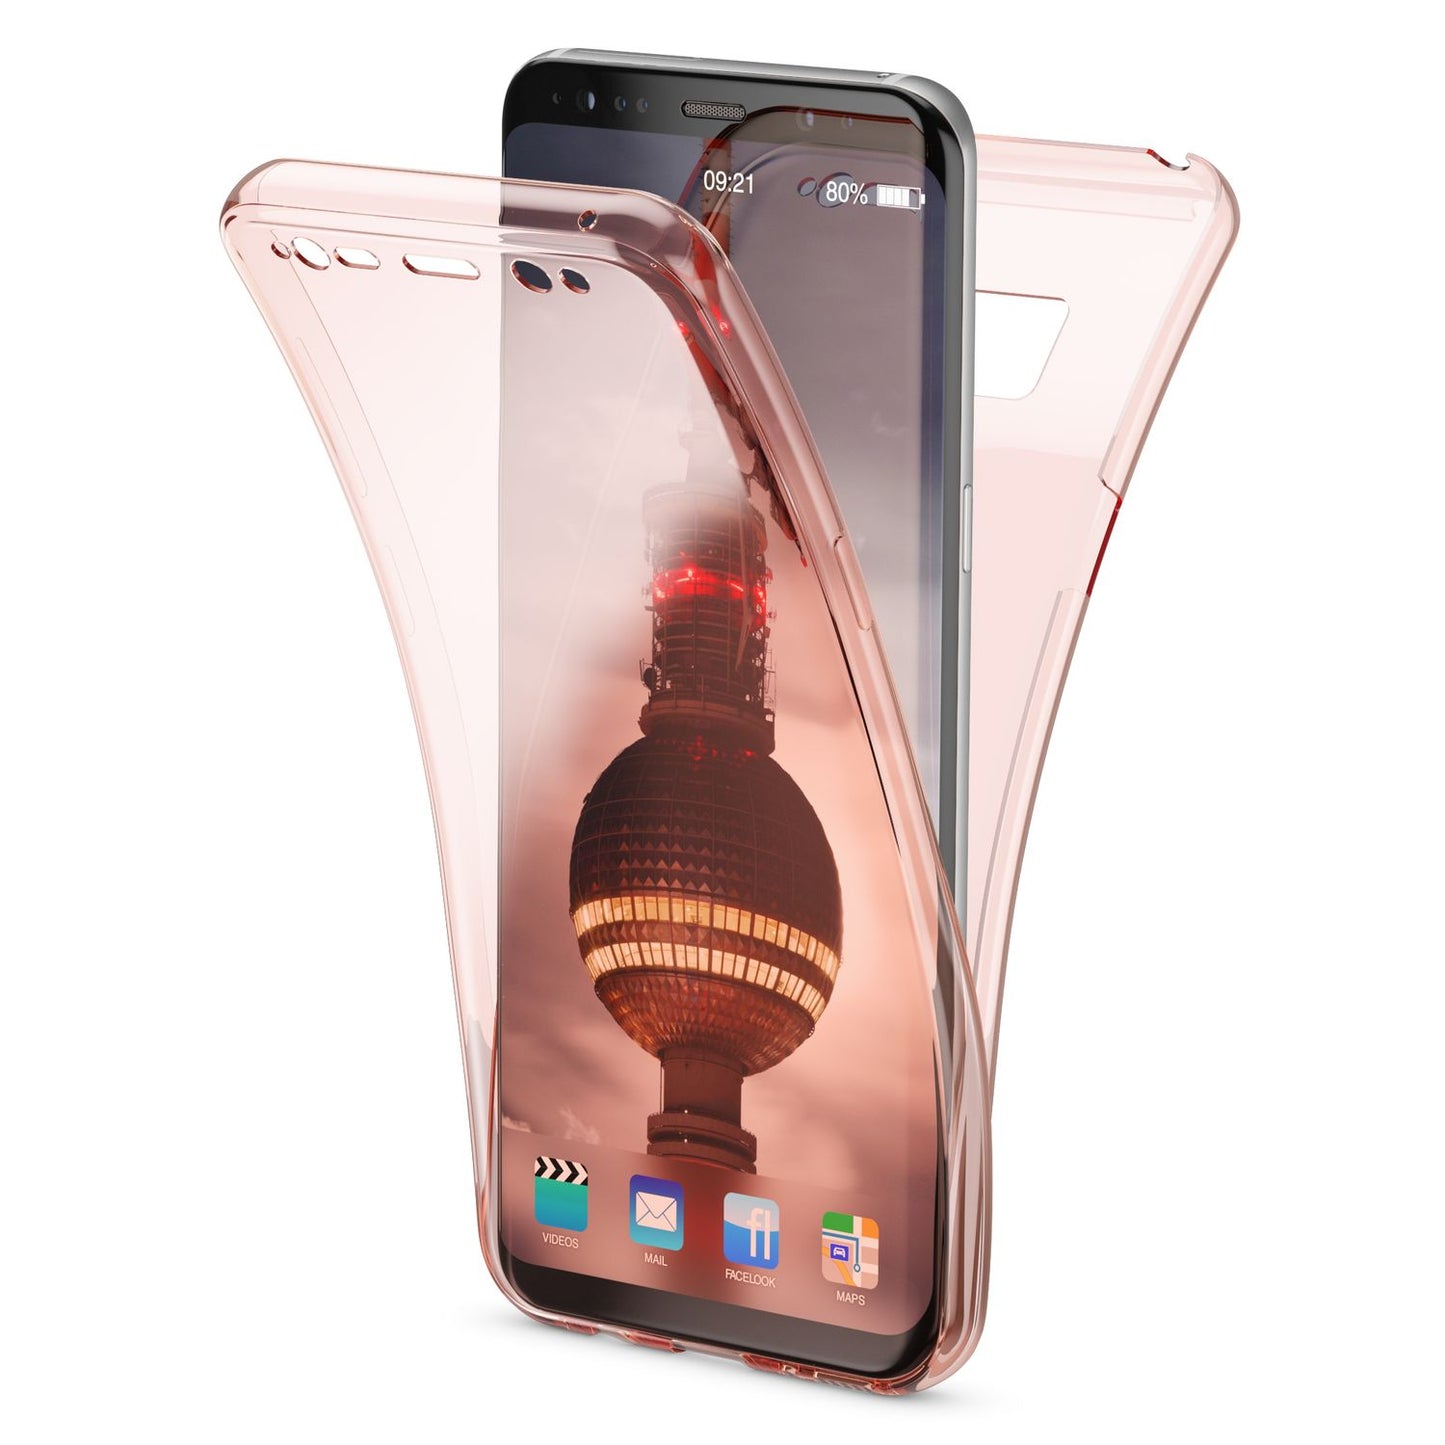 NALIA 360 Grad Hülle für Samsung Galaxy S8 Plus, Full Cover Rundum Doppel Schutz